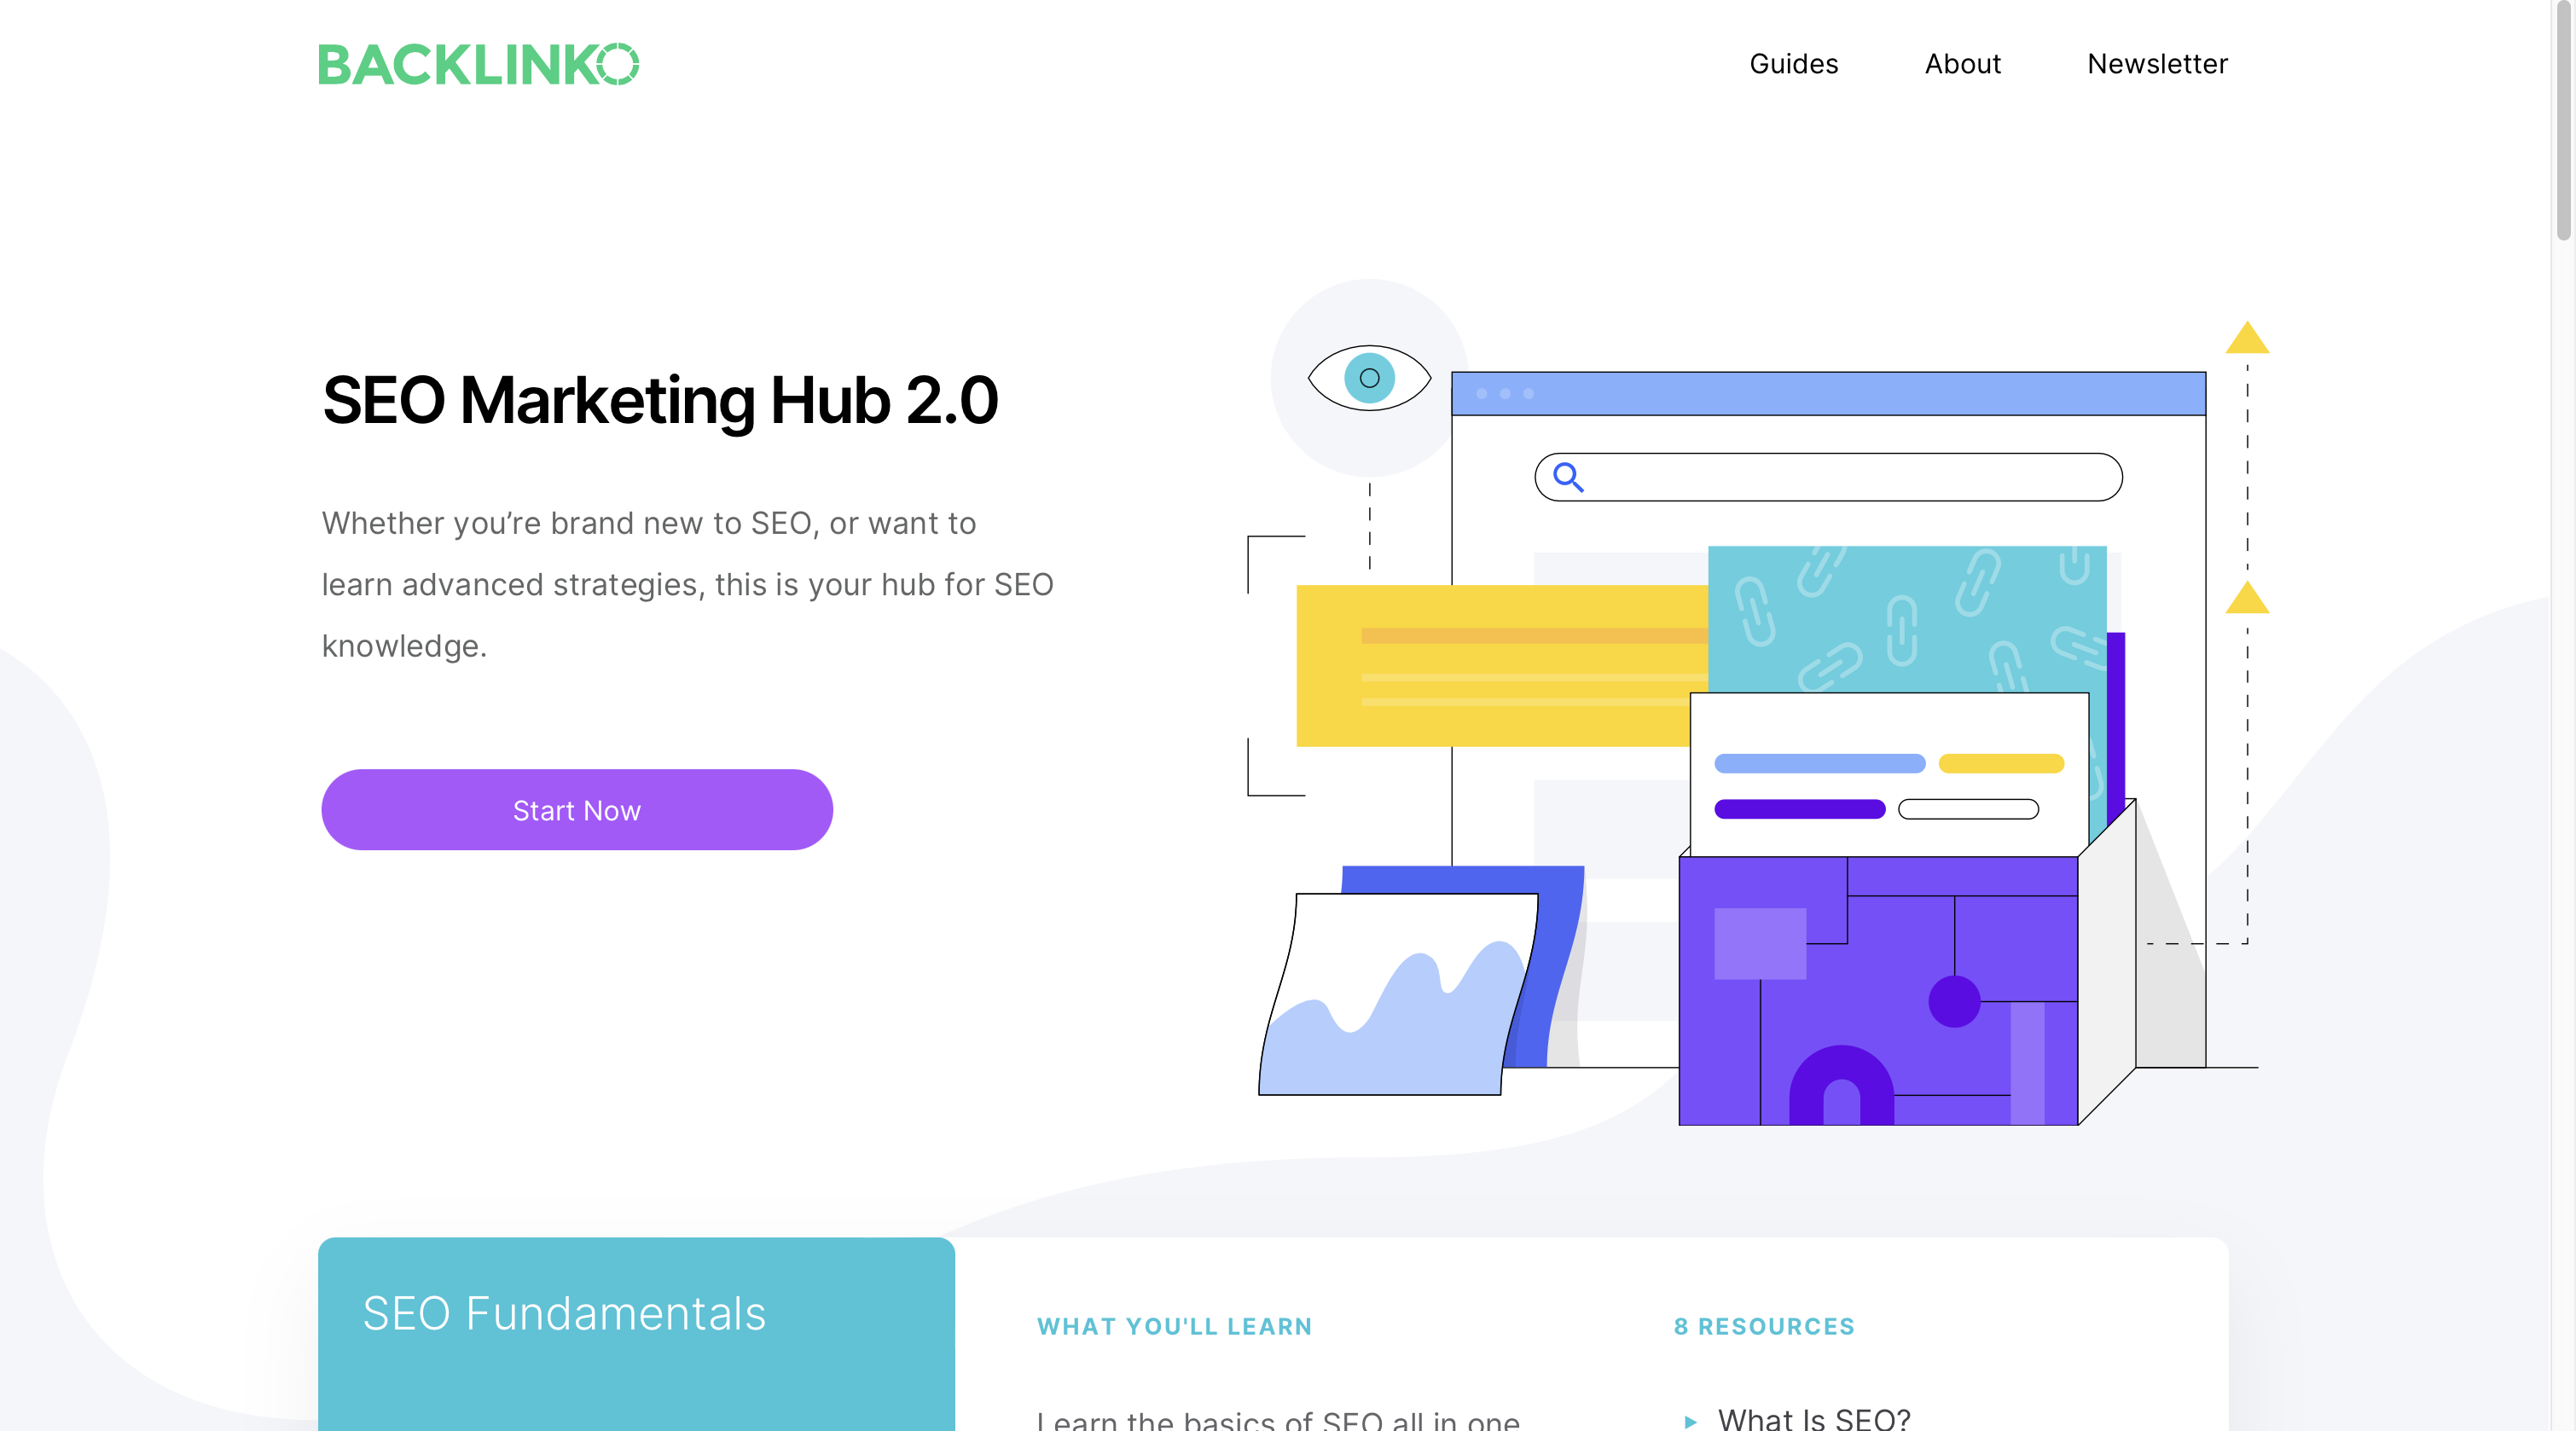 An image about the Backlinko SEO Hub tool